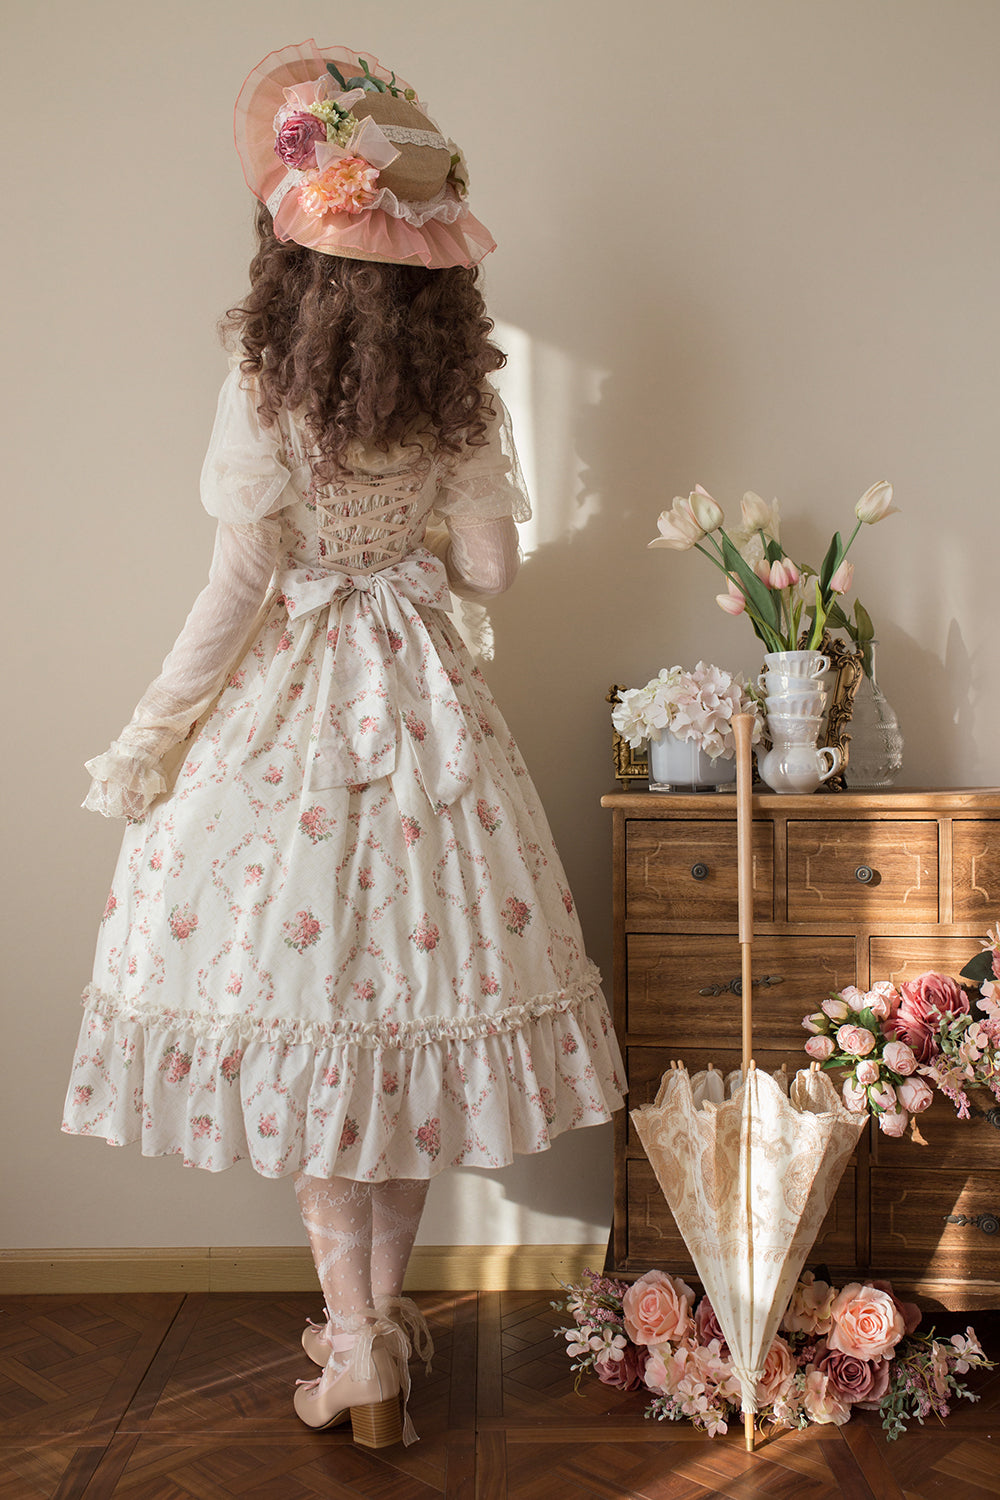 Miss Point~Customized Wood Rose 2.0 Elegant Vintage Jumper Skirt   